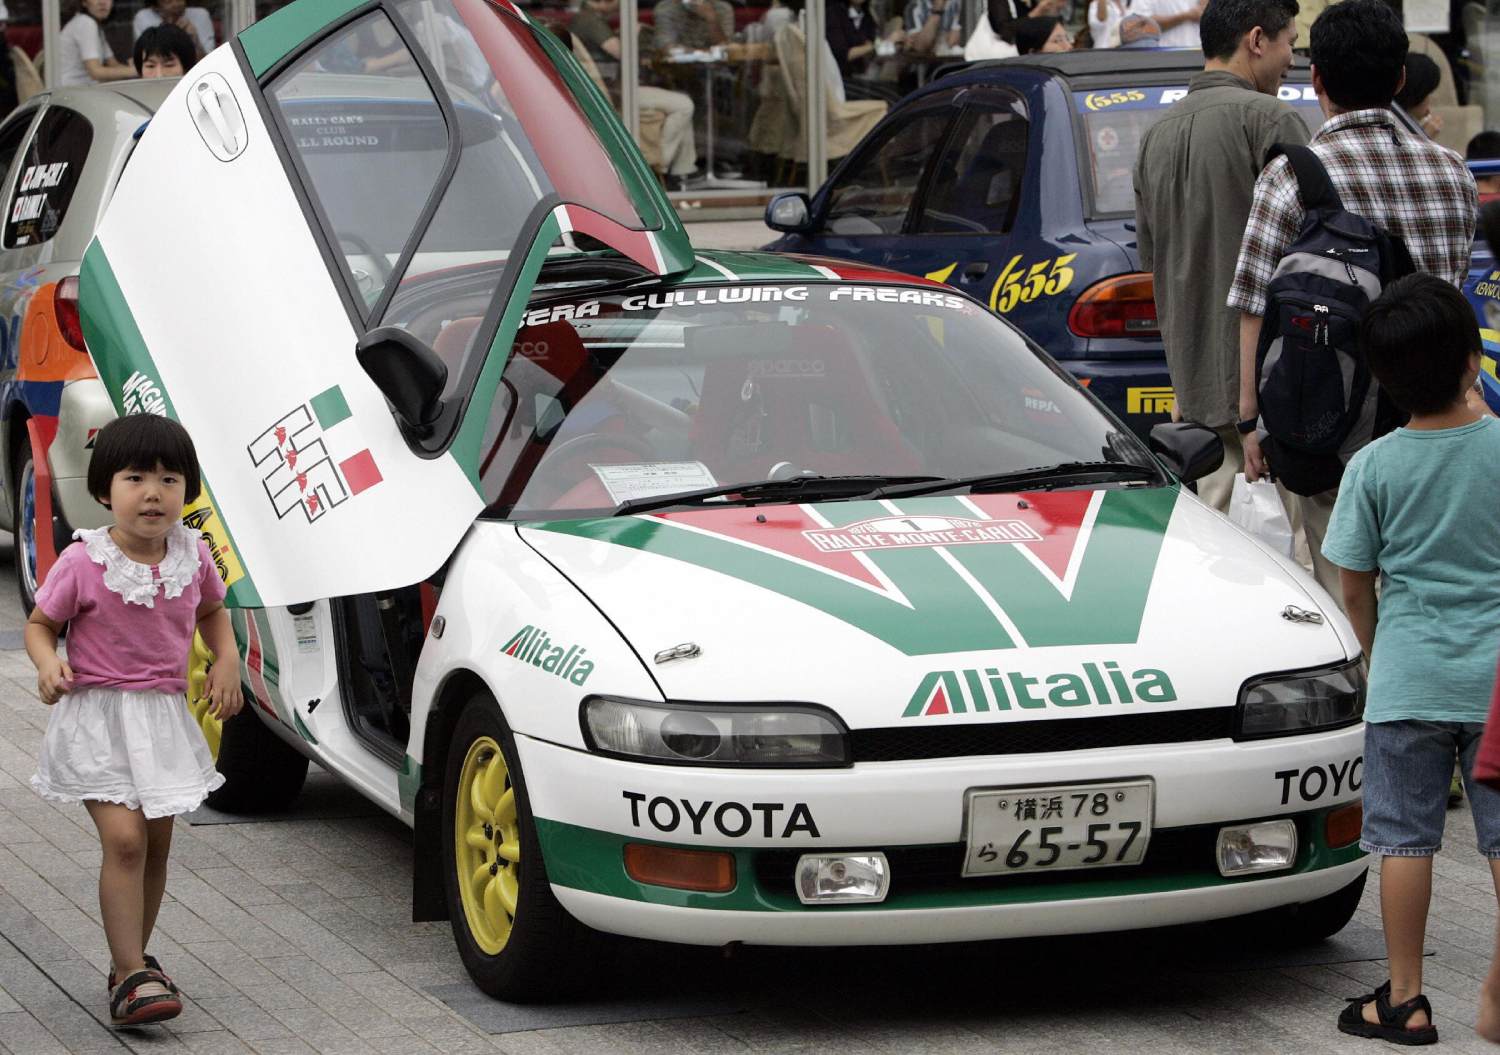 A colorful Toyota Sera on display.